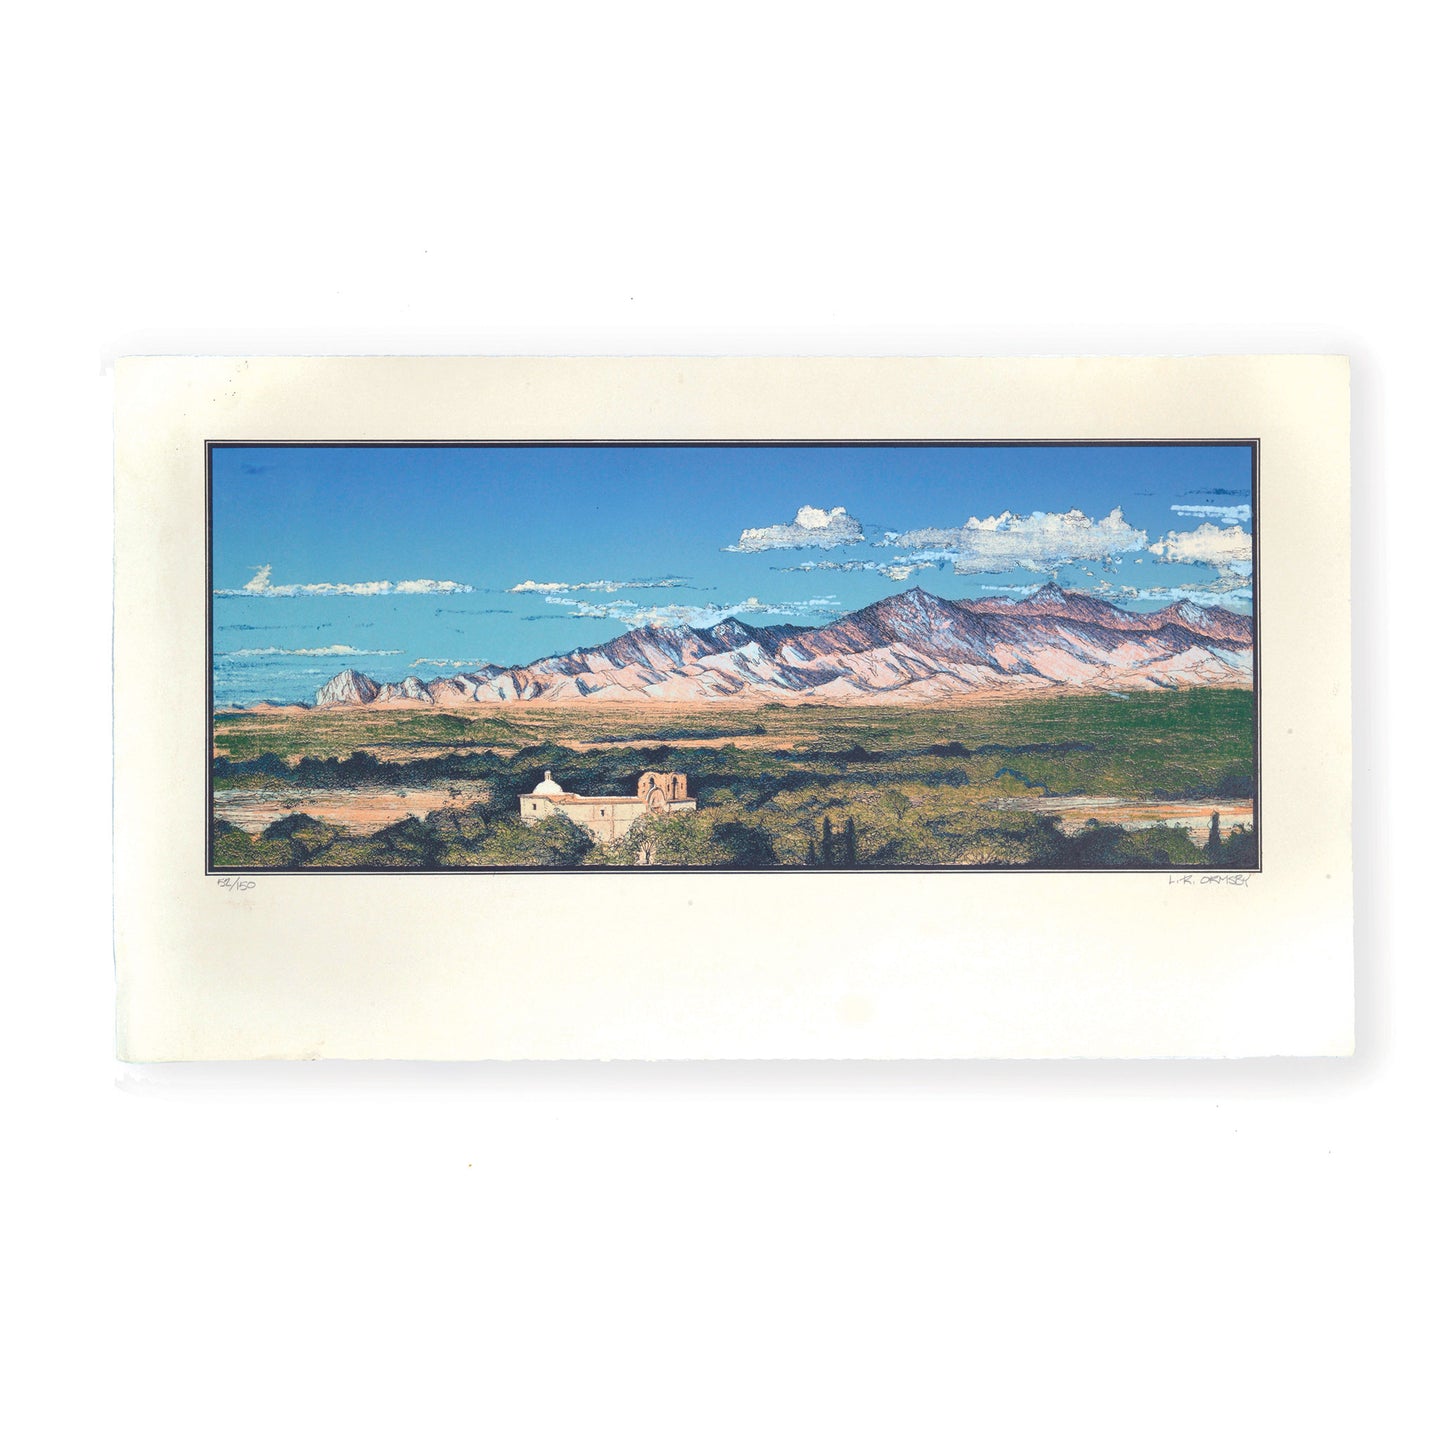 Tumacacori Valley scene lithograph, Tumacacori National Historical Park, Arizona